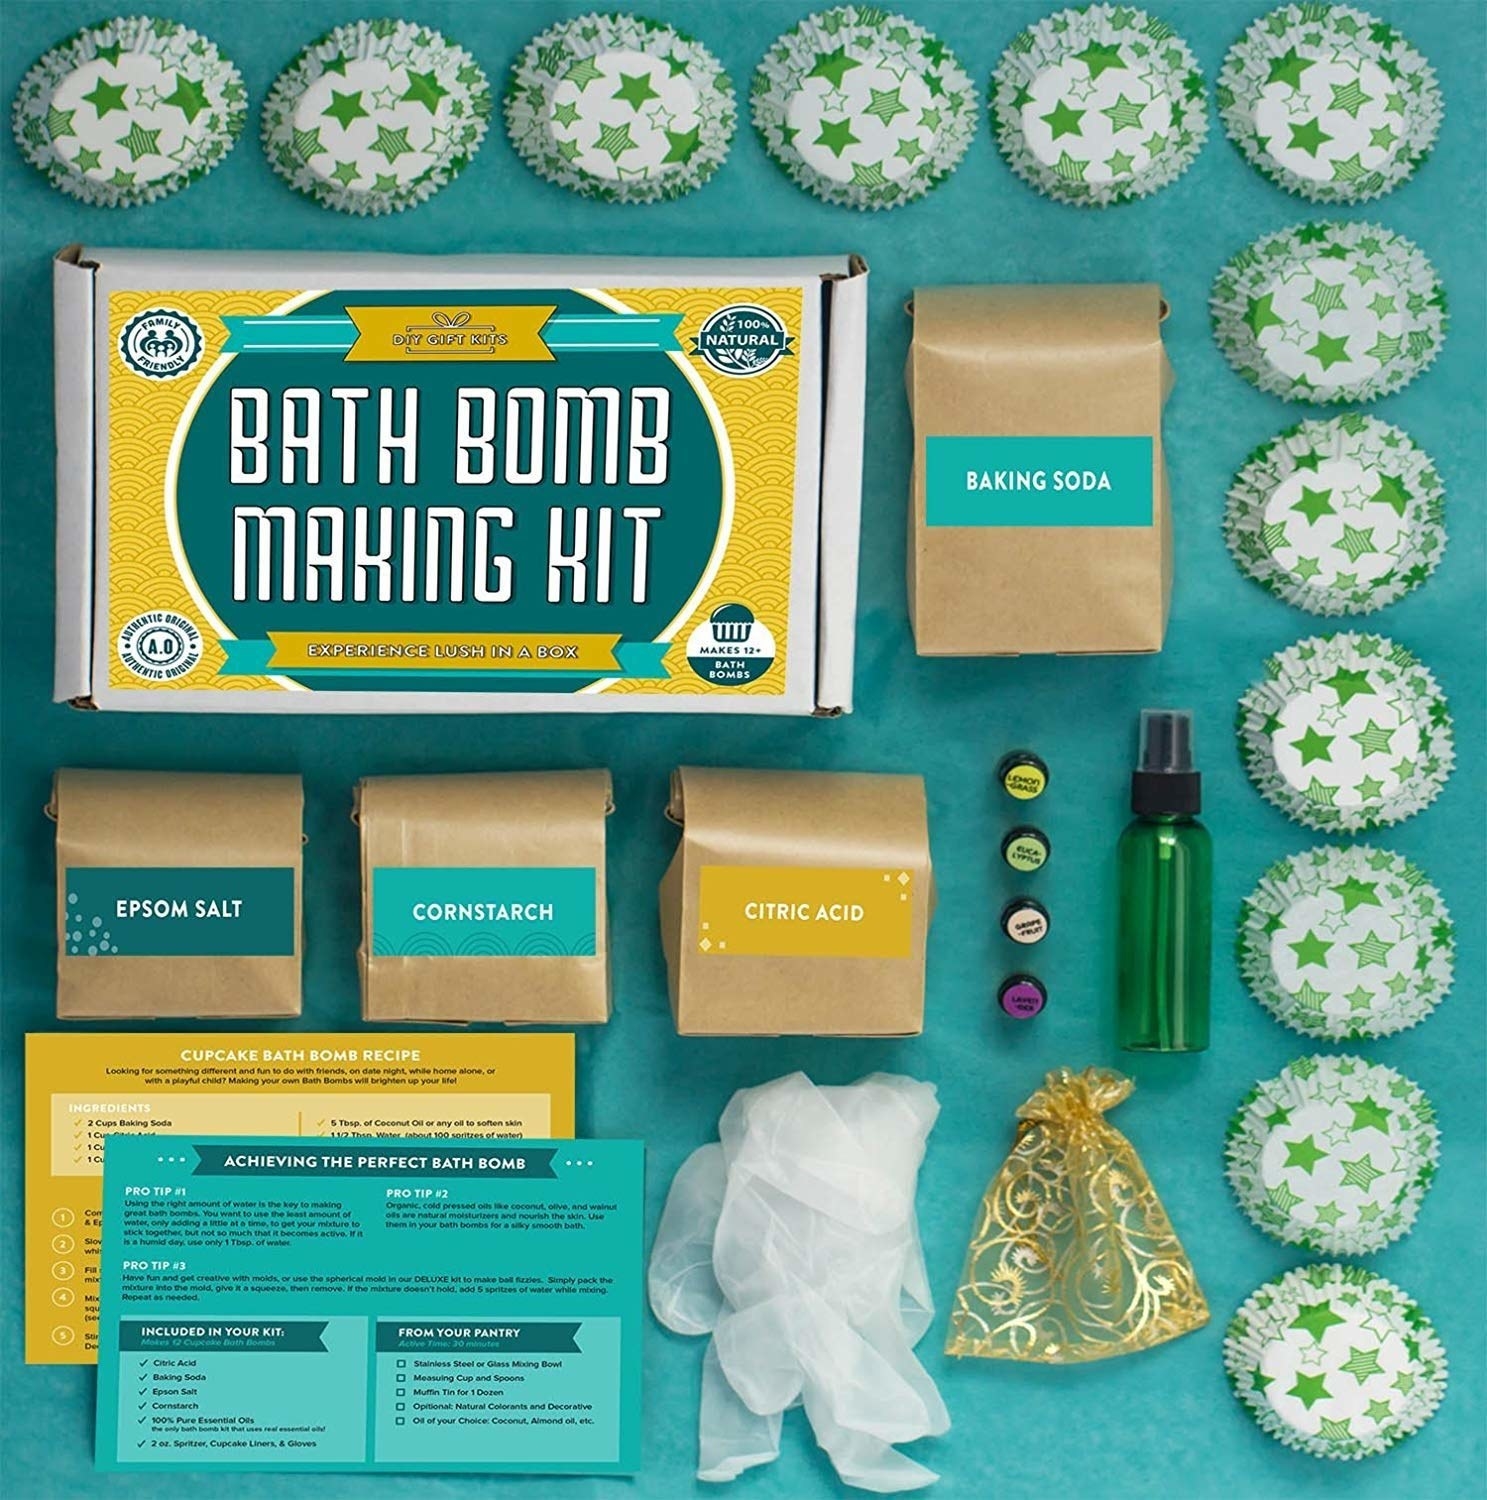 the bath bomb kit